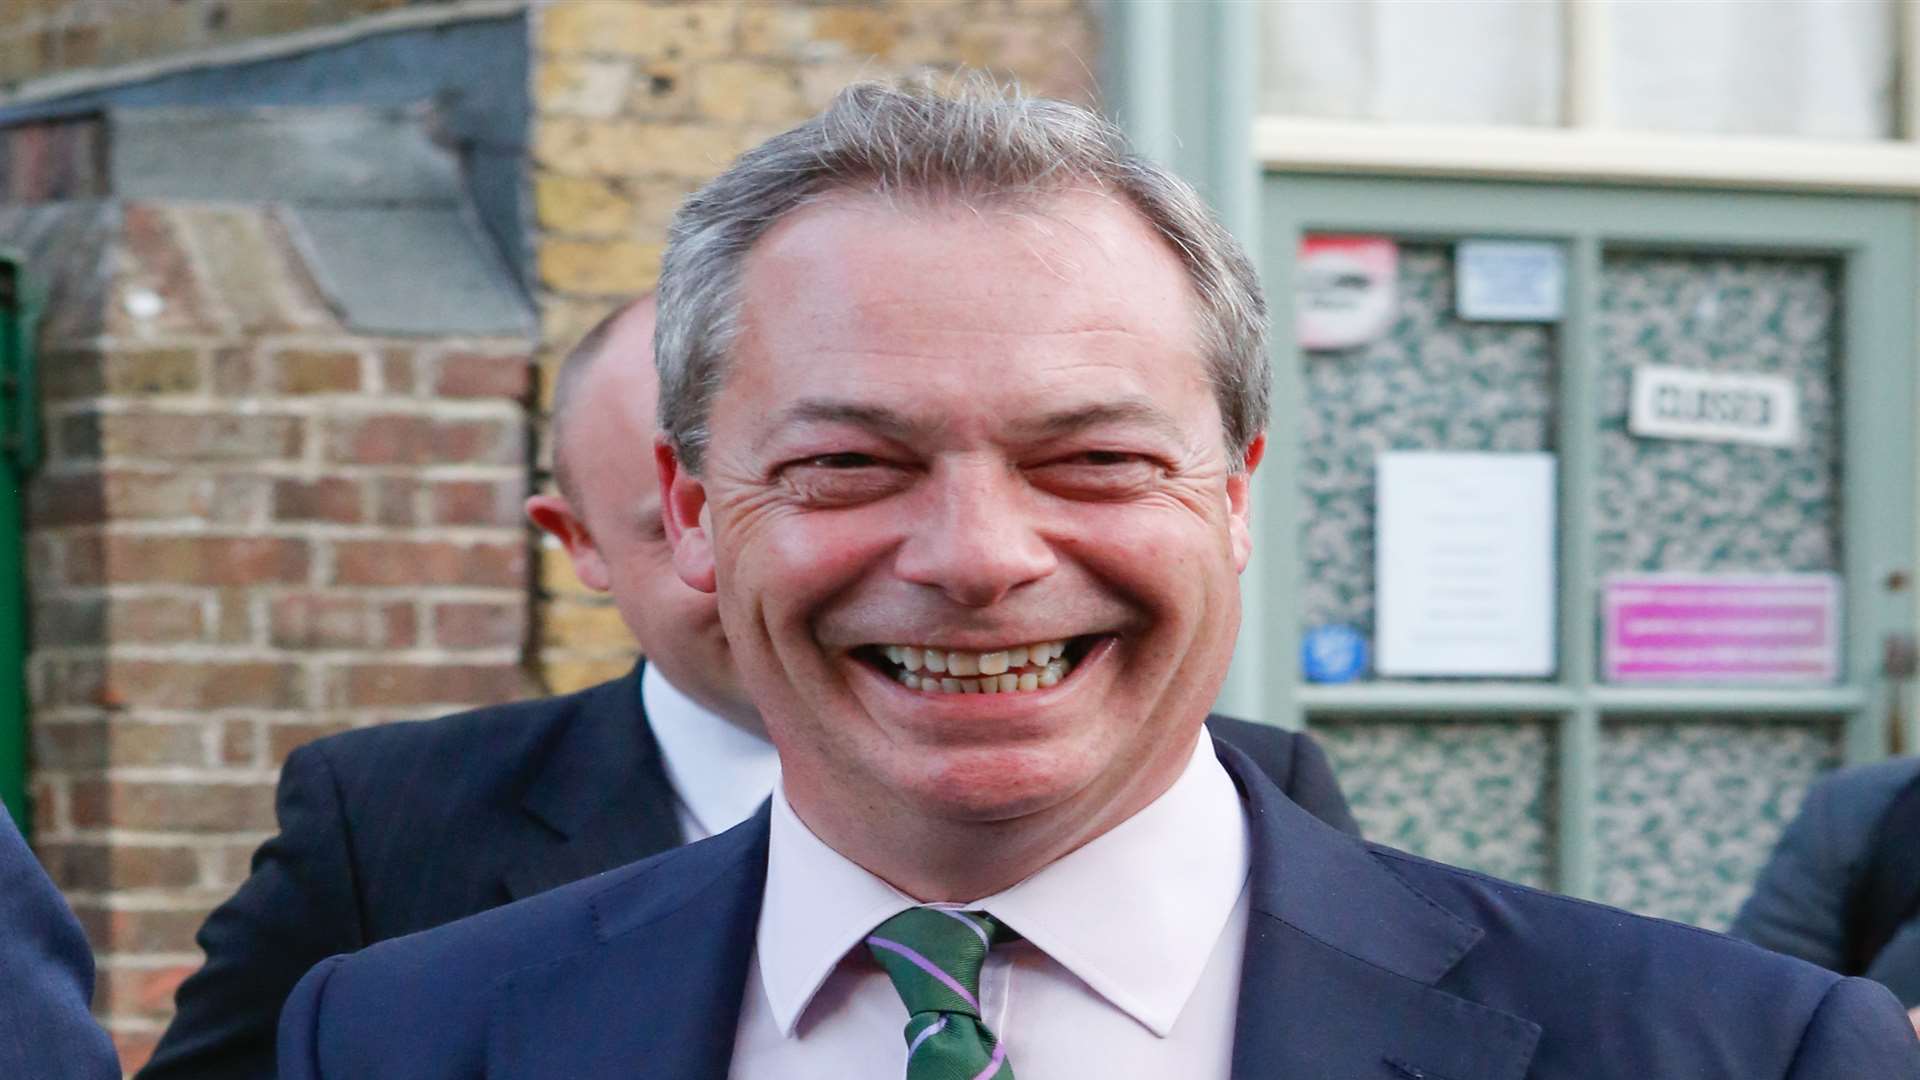 An upbeat Nigel Farage